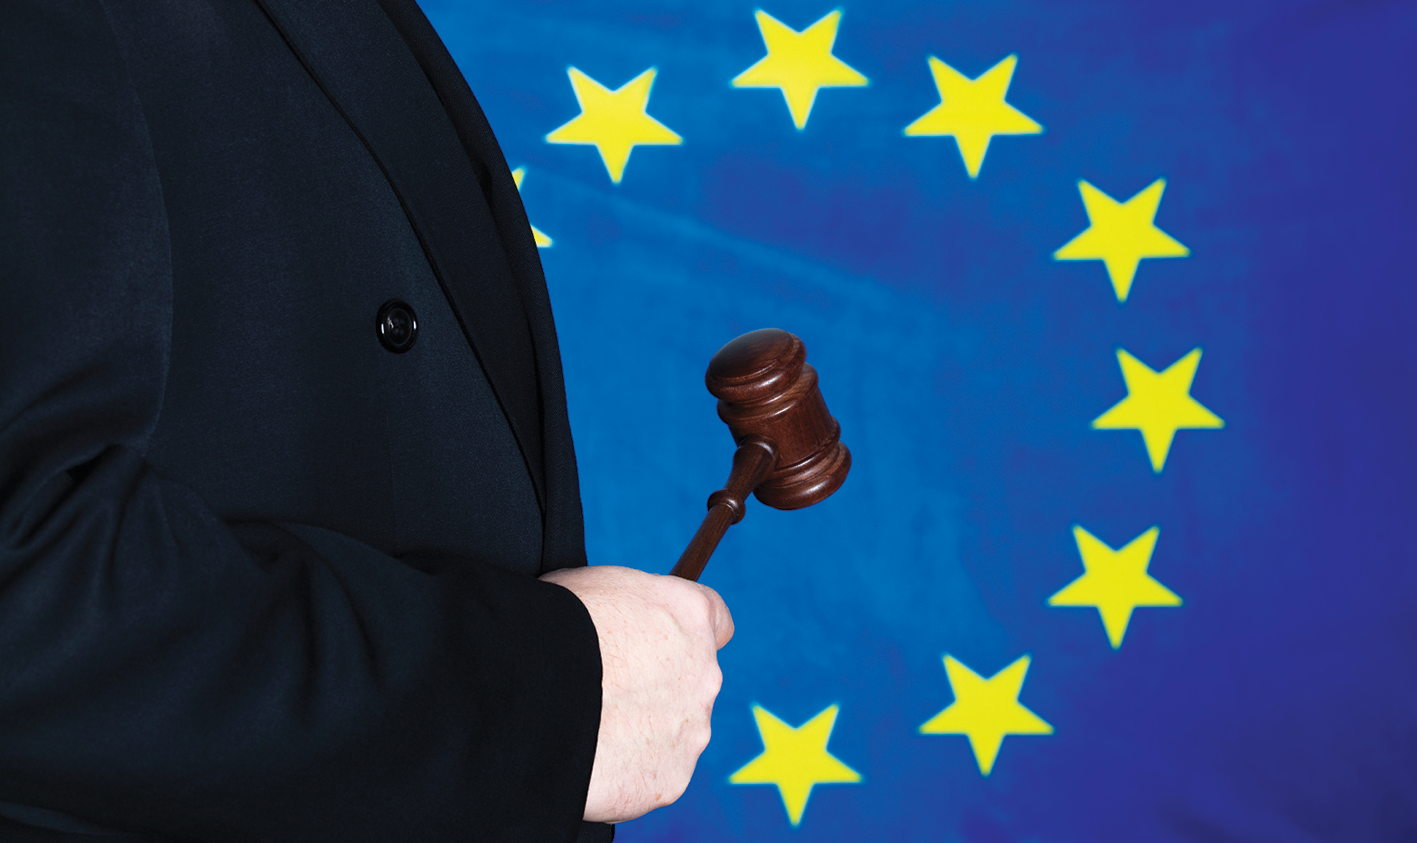 Autonomous public bodies in the European legal sphere